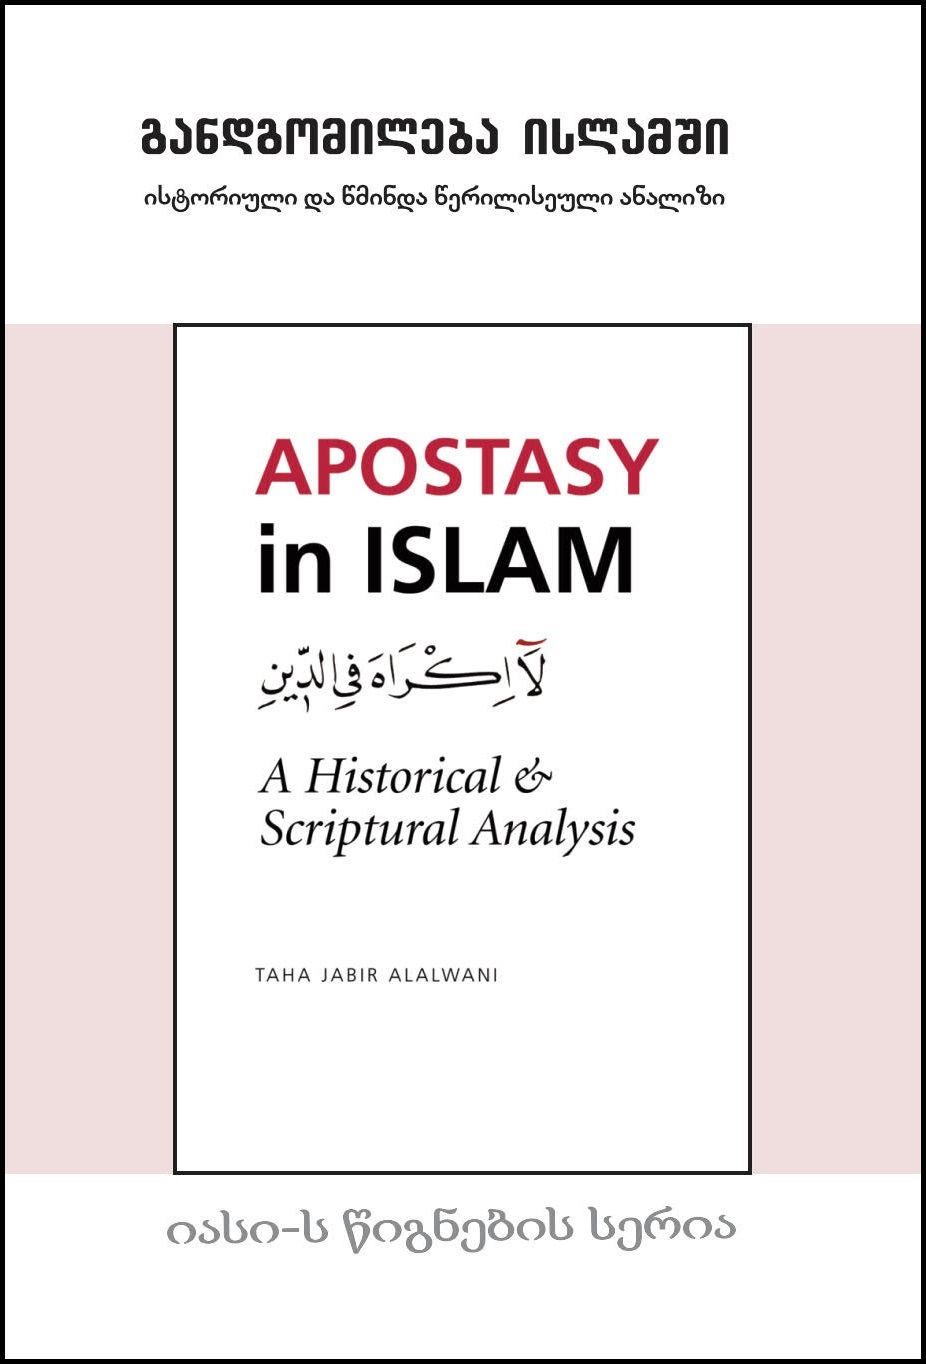 Georgian: gandgomileba islamSi - istoriuli da wminda weriliseuli analizi (Book-in-Brief: Apostasy in Islam: A Historical and Scriptural Analysis)